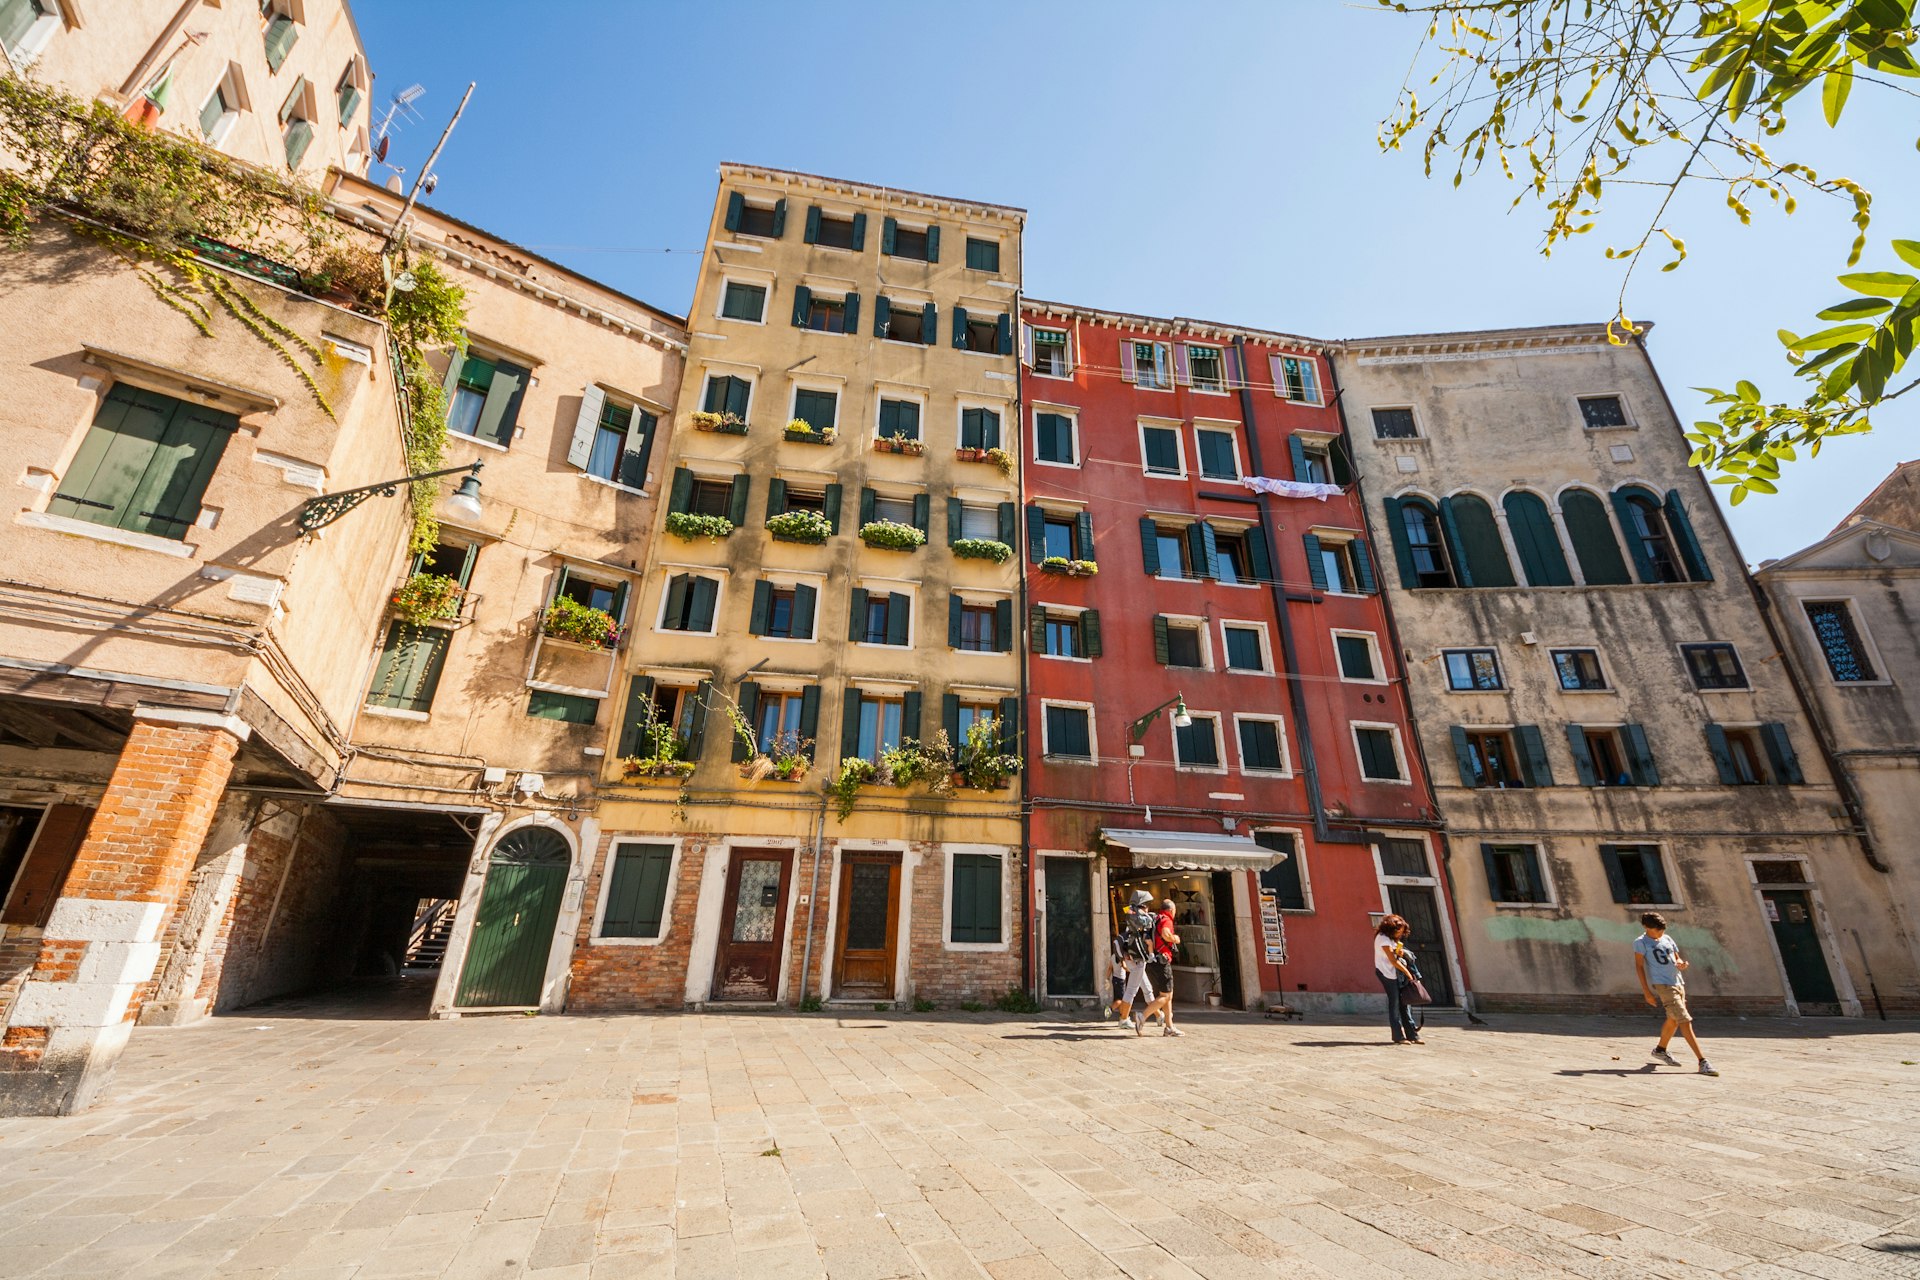 worms eye view of Jewish quarter apartments, in Cannaregio Venice, Veneto, Italy